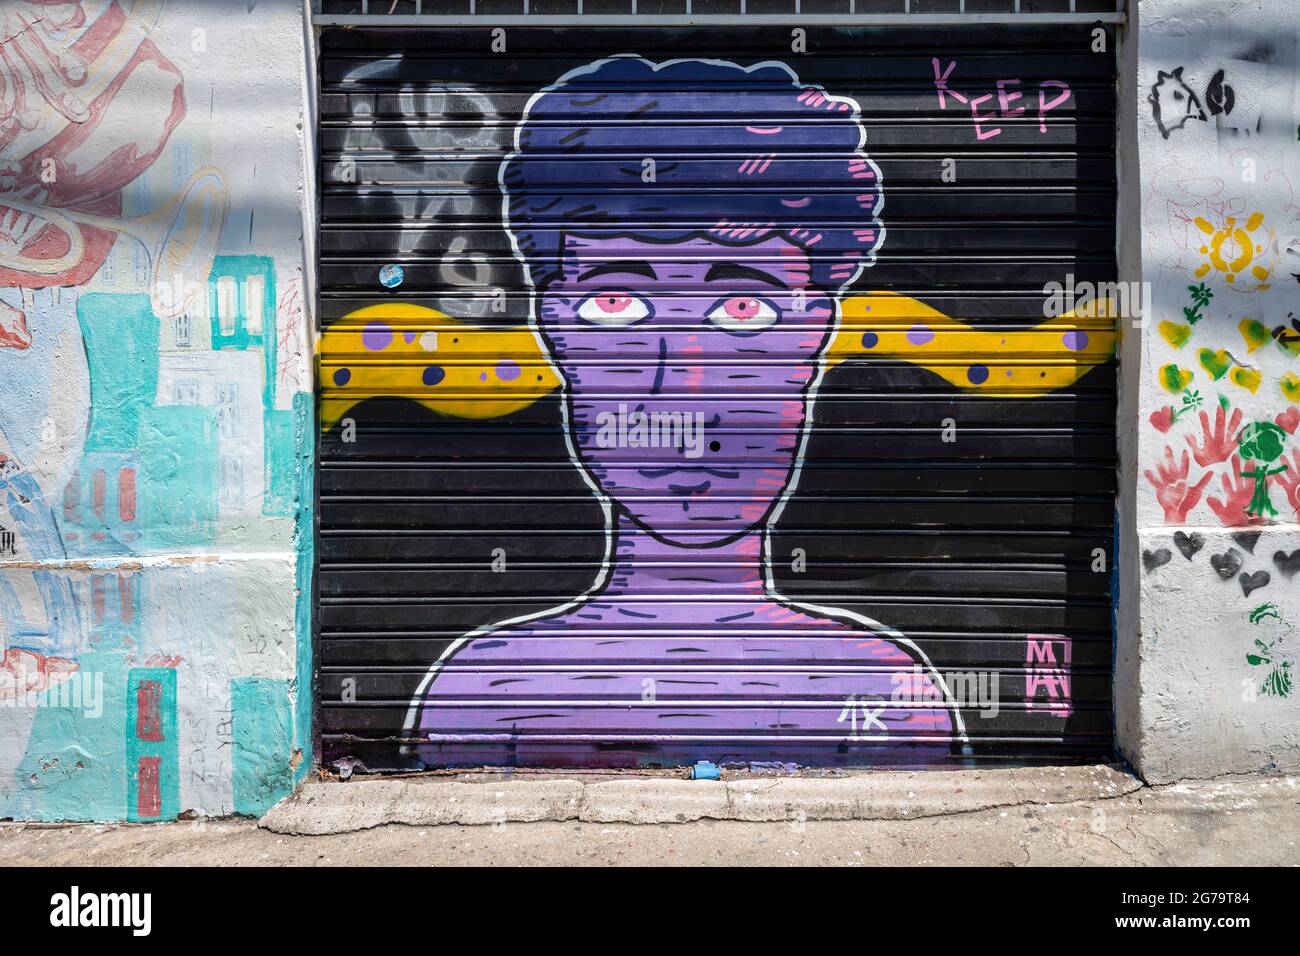 Graffiti street art murals line the streets and back alleys of Rio de Janeiro, especially in the Santa Teresa and Lapa neighborhoods. Stock Photo